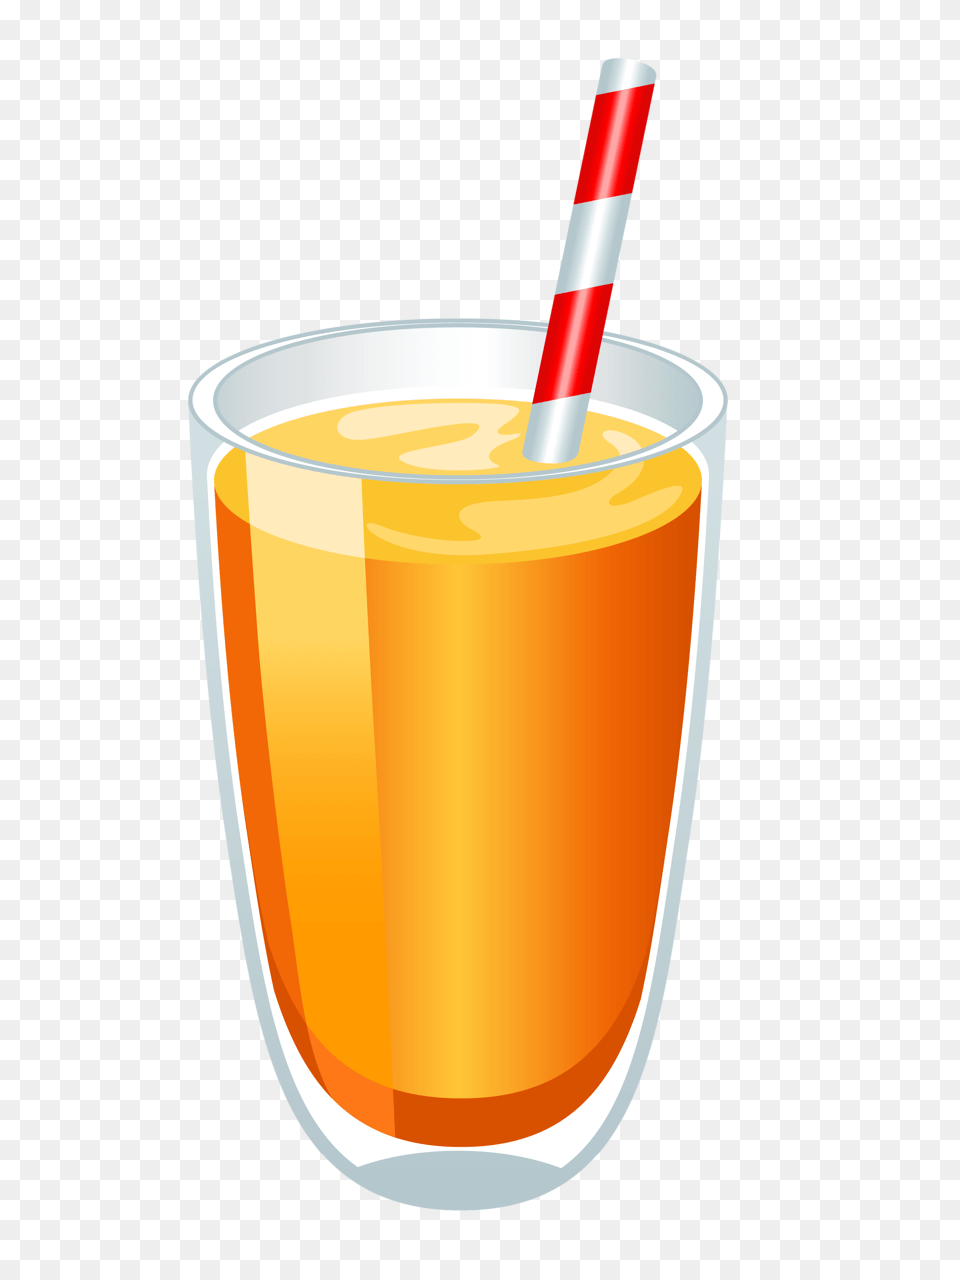 Food Clip Art Food Clips Clip Art And Food, Beverage, Juice, Smoothie, Orange Juice Free Png Download